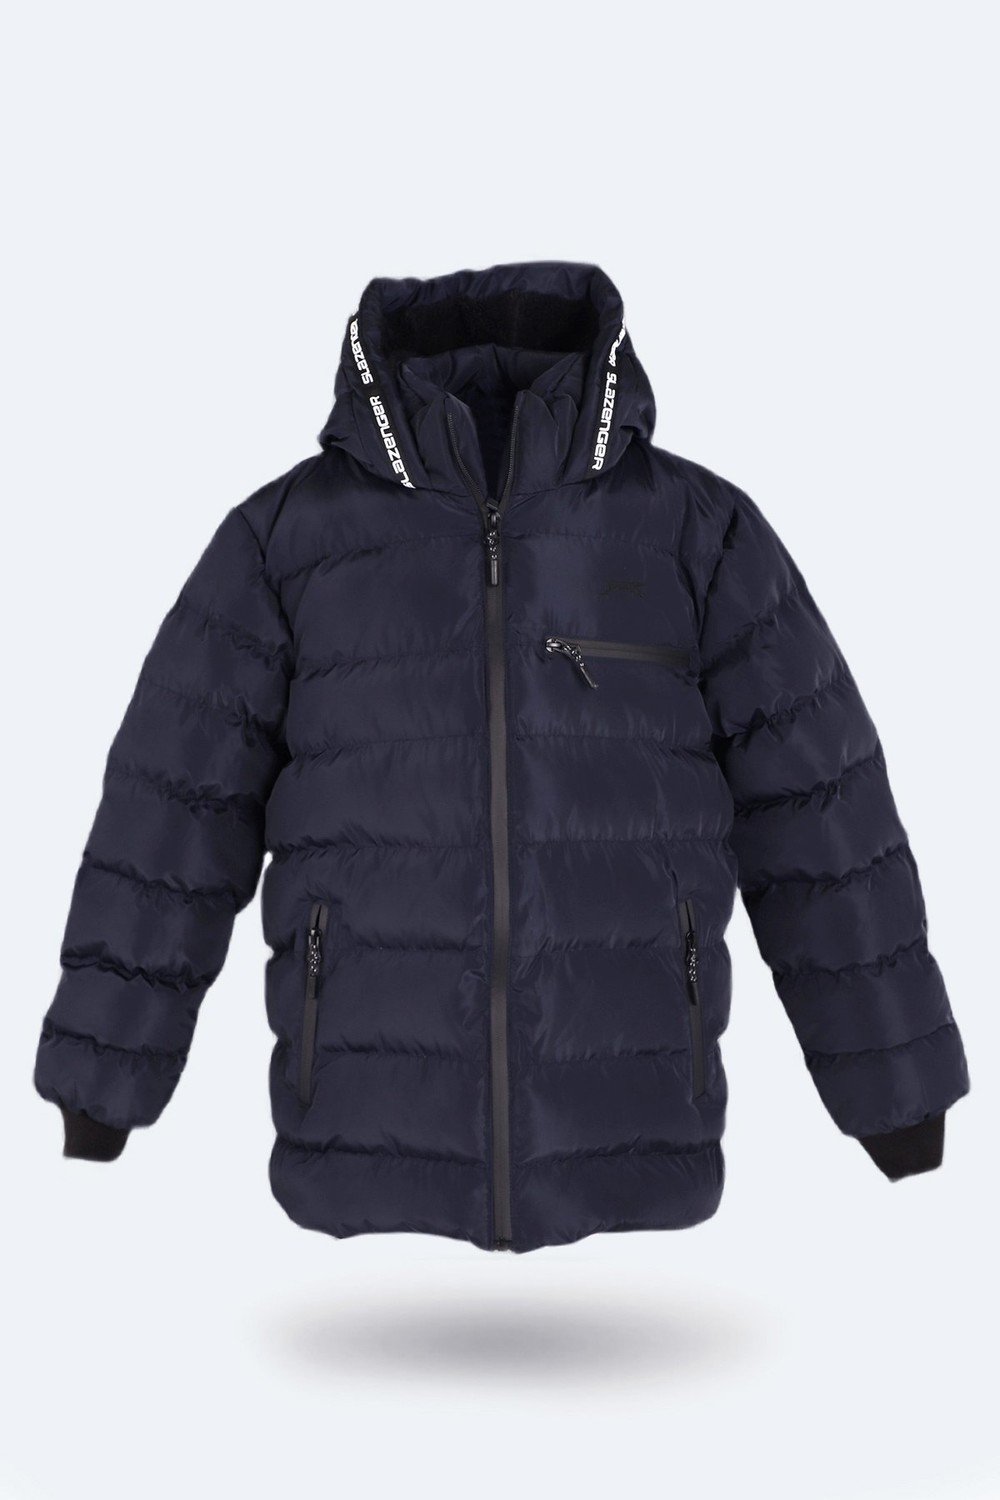 Slazenger Winter Jacket - Dark blue - Regular